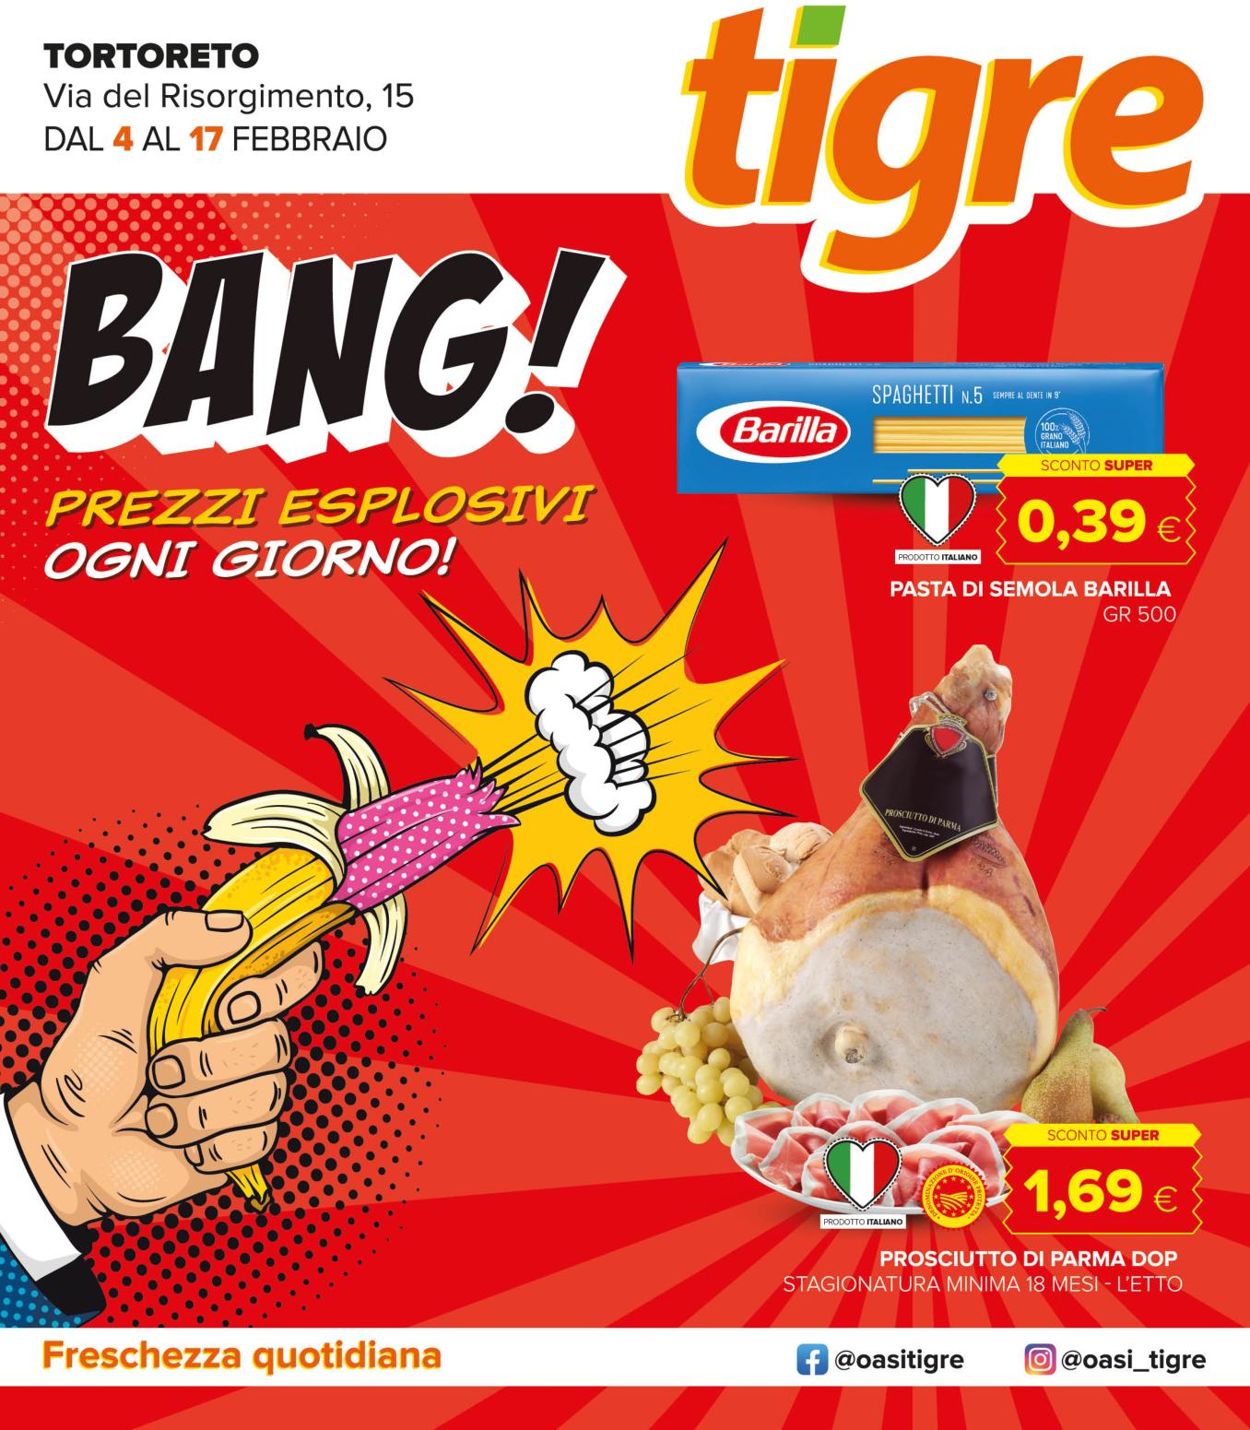 Volantino Tigre - Tortoreto - Offerte 04/02-17/02/2021